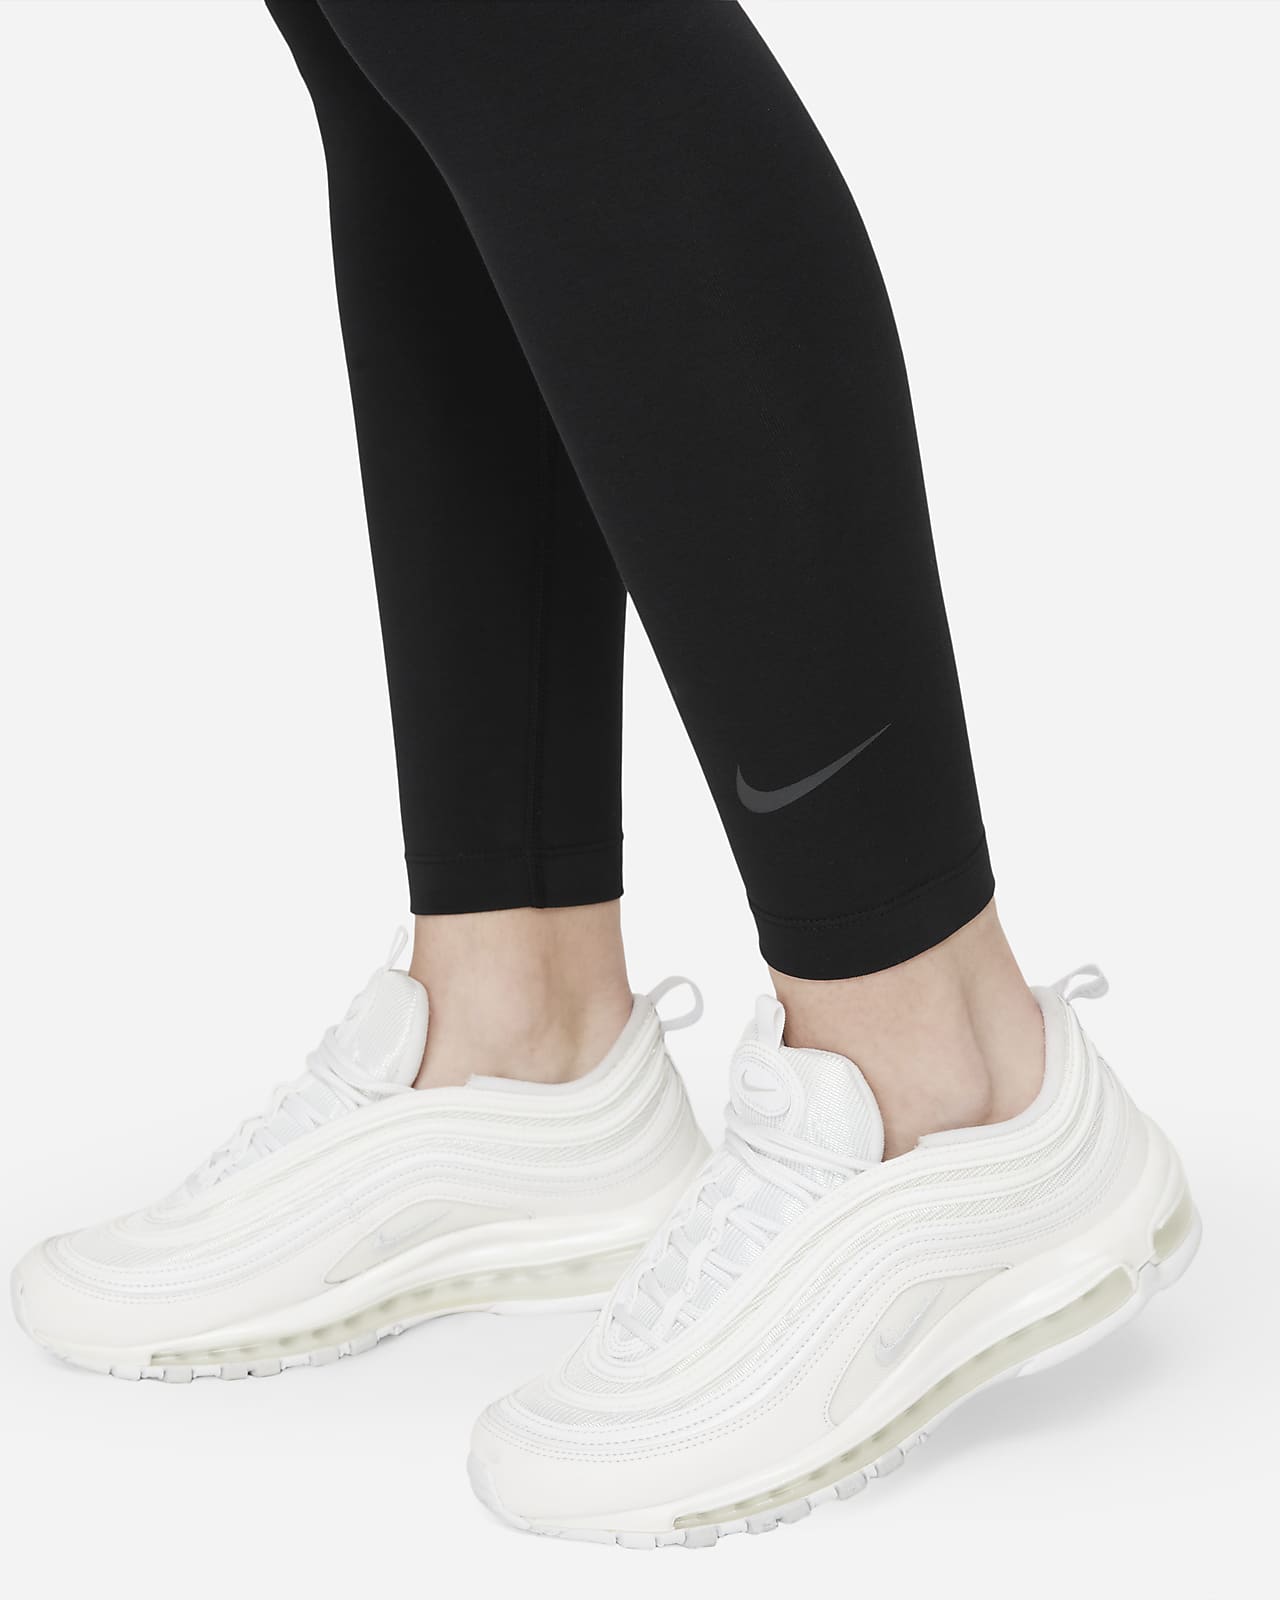 Nike Womens Yoga Wrap High Waist Leggings cj4215-516 Plum Chalk Barely Rose  XL